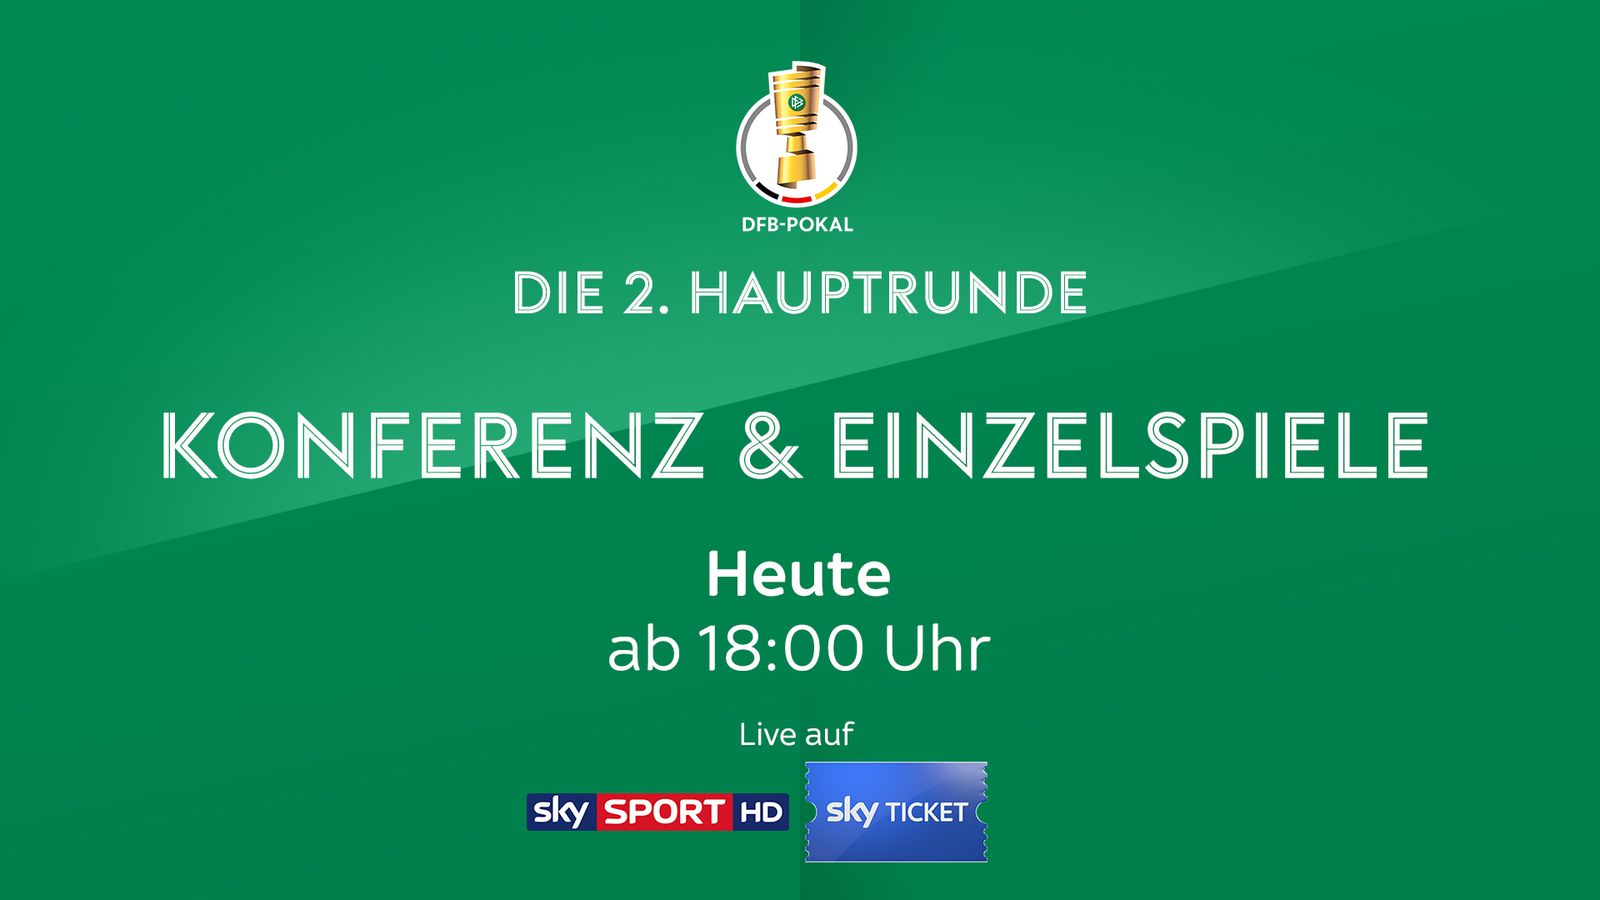 DFB Pokal Übertragung Heute live auf Sky